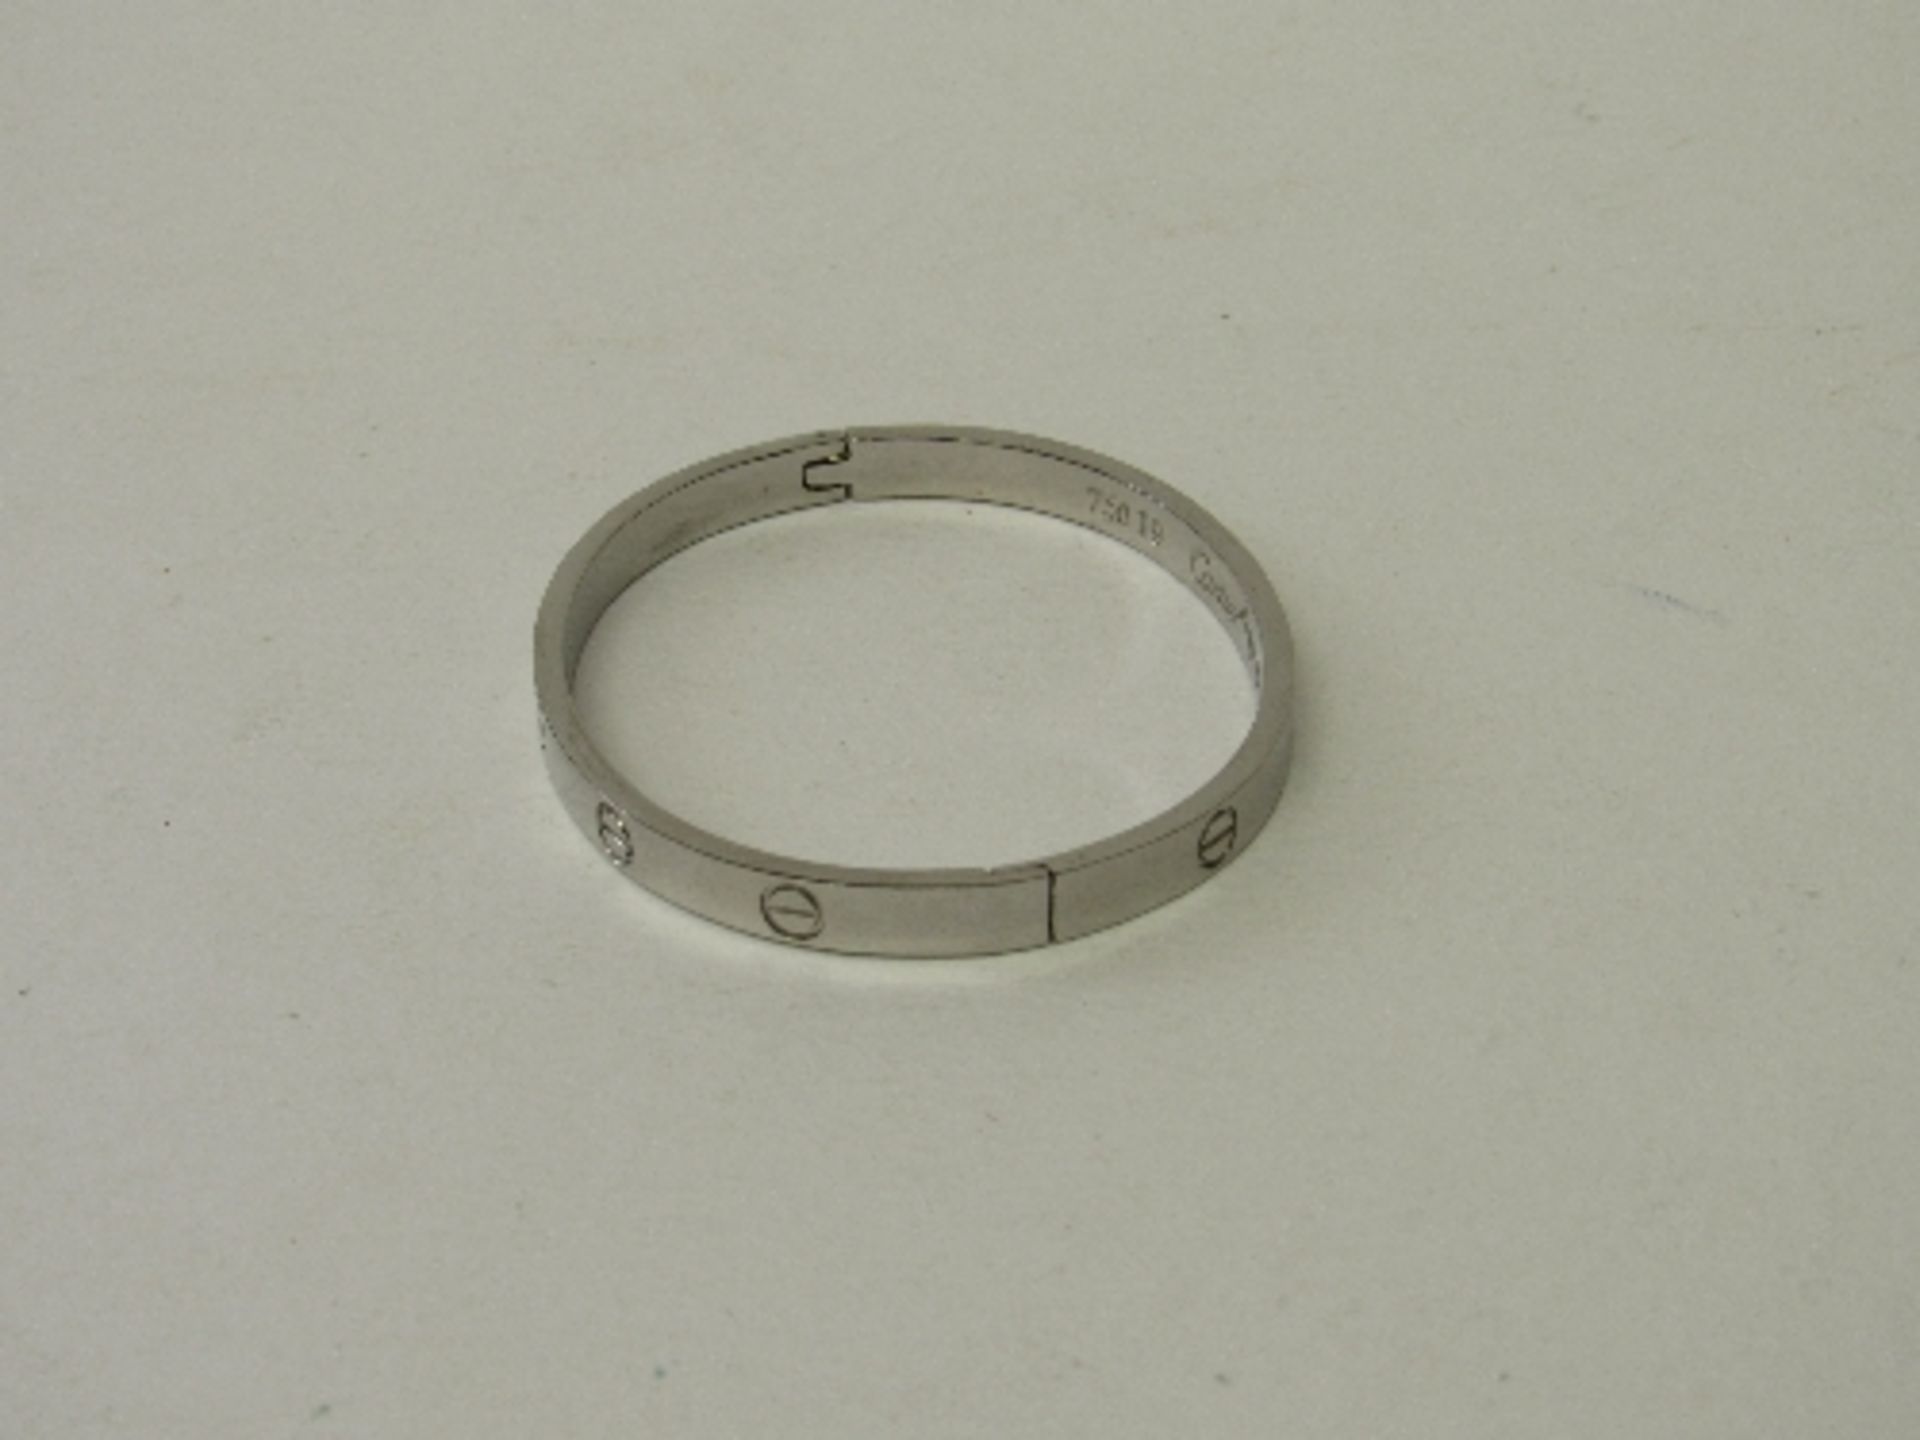 18ct white gold Cartier bracelet IP6688. Estimate £2,500-2,800. - Image 2 of 2